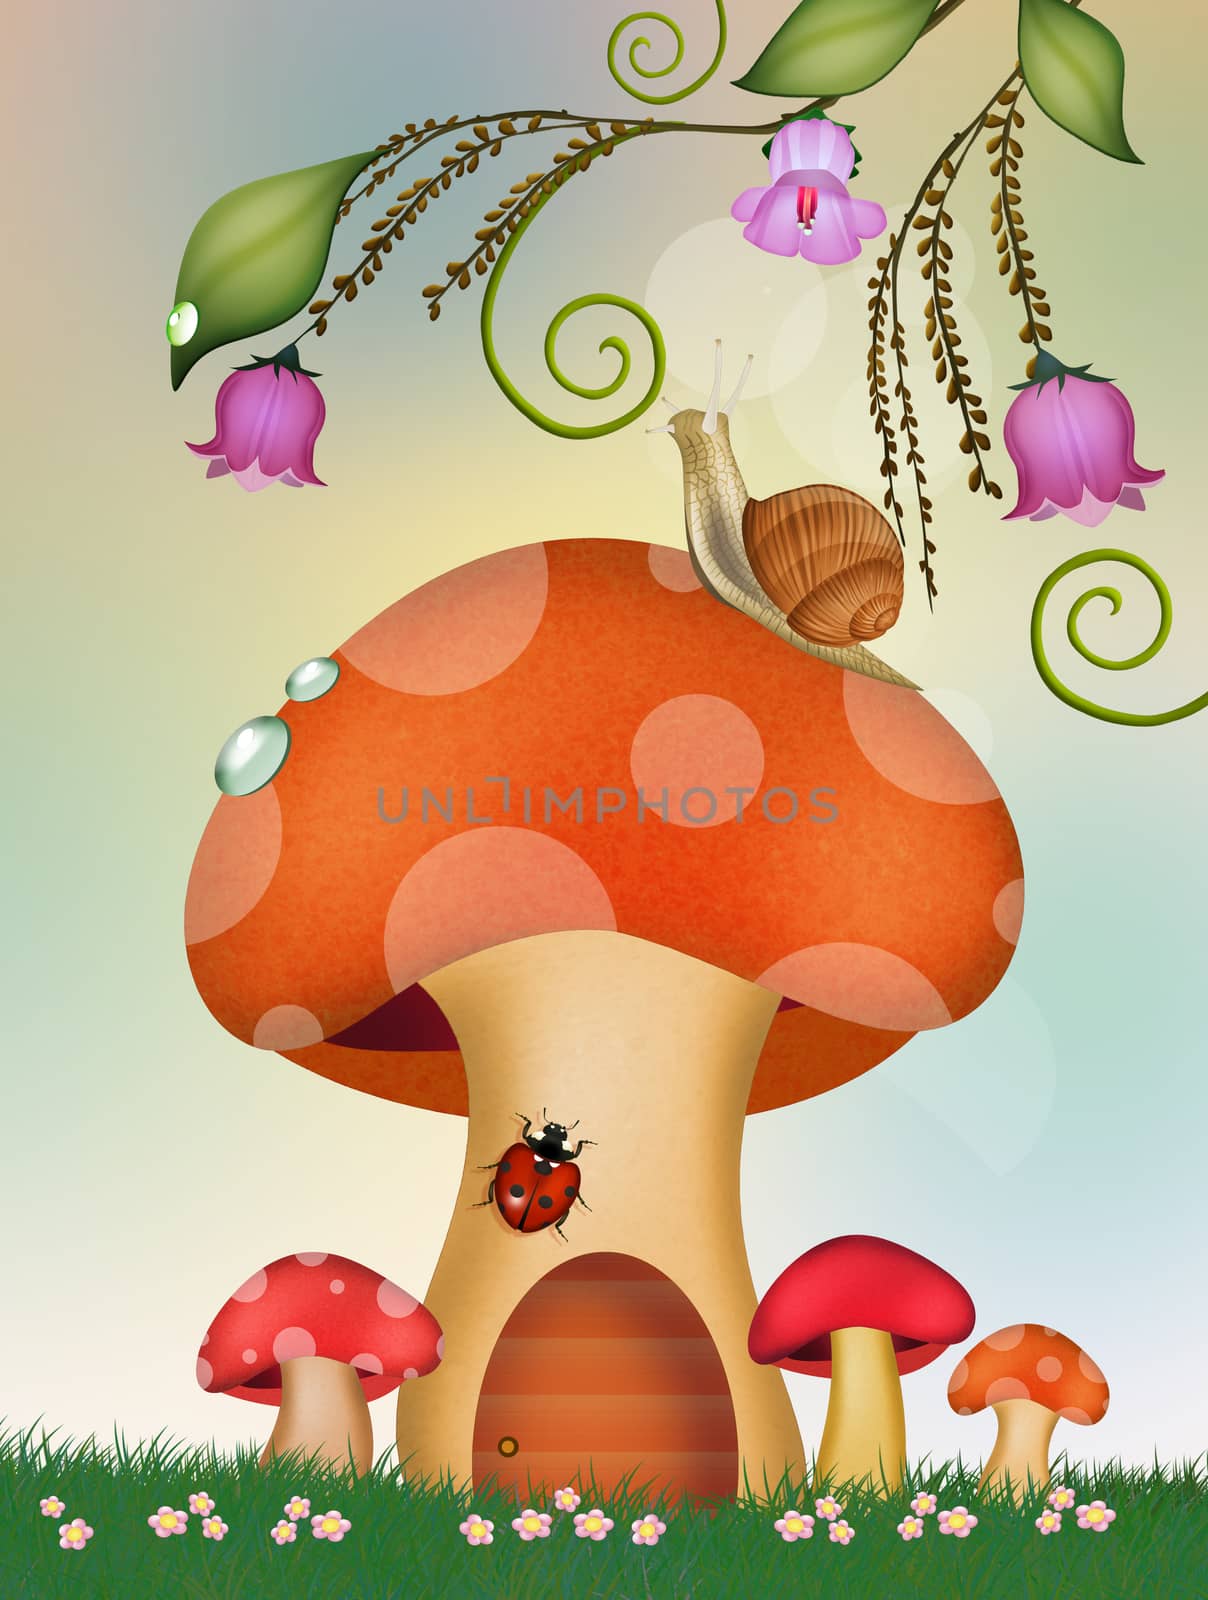 illustration of snails on the mushroom